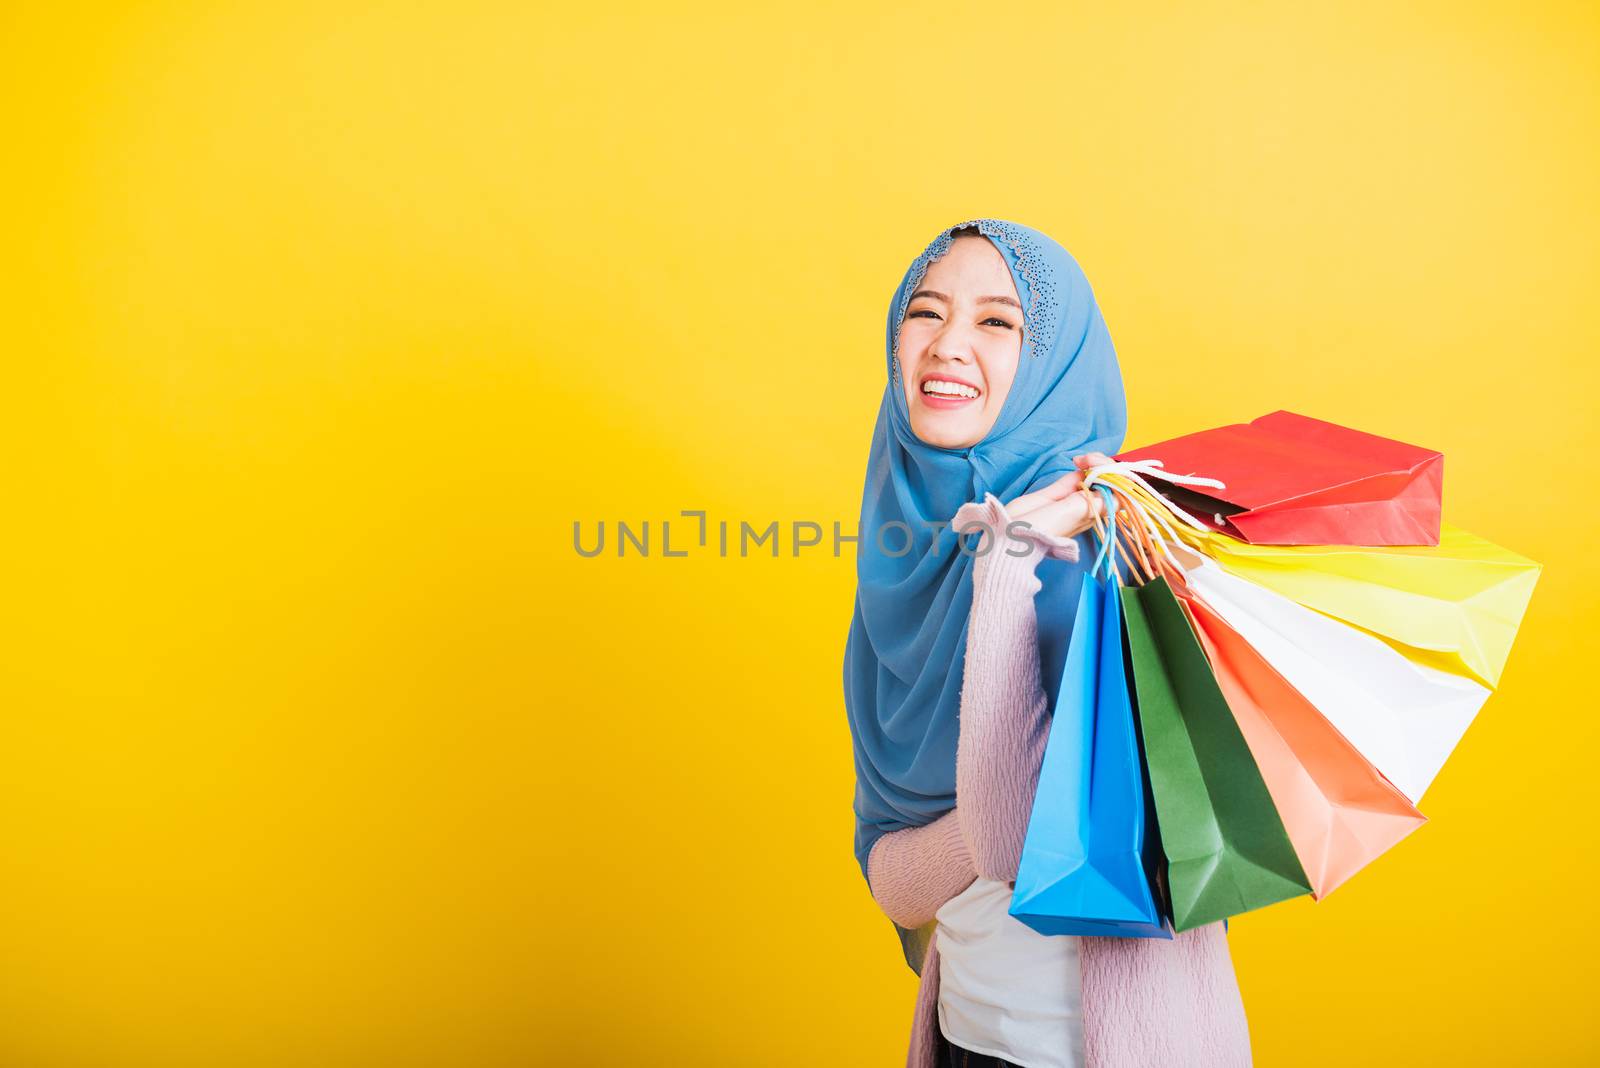 Asian Muslim Arab woman Islam wear hijab she holding colorful sh by Sorapop